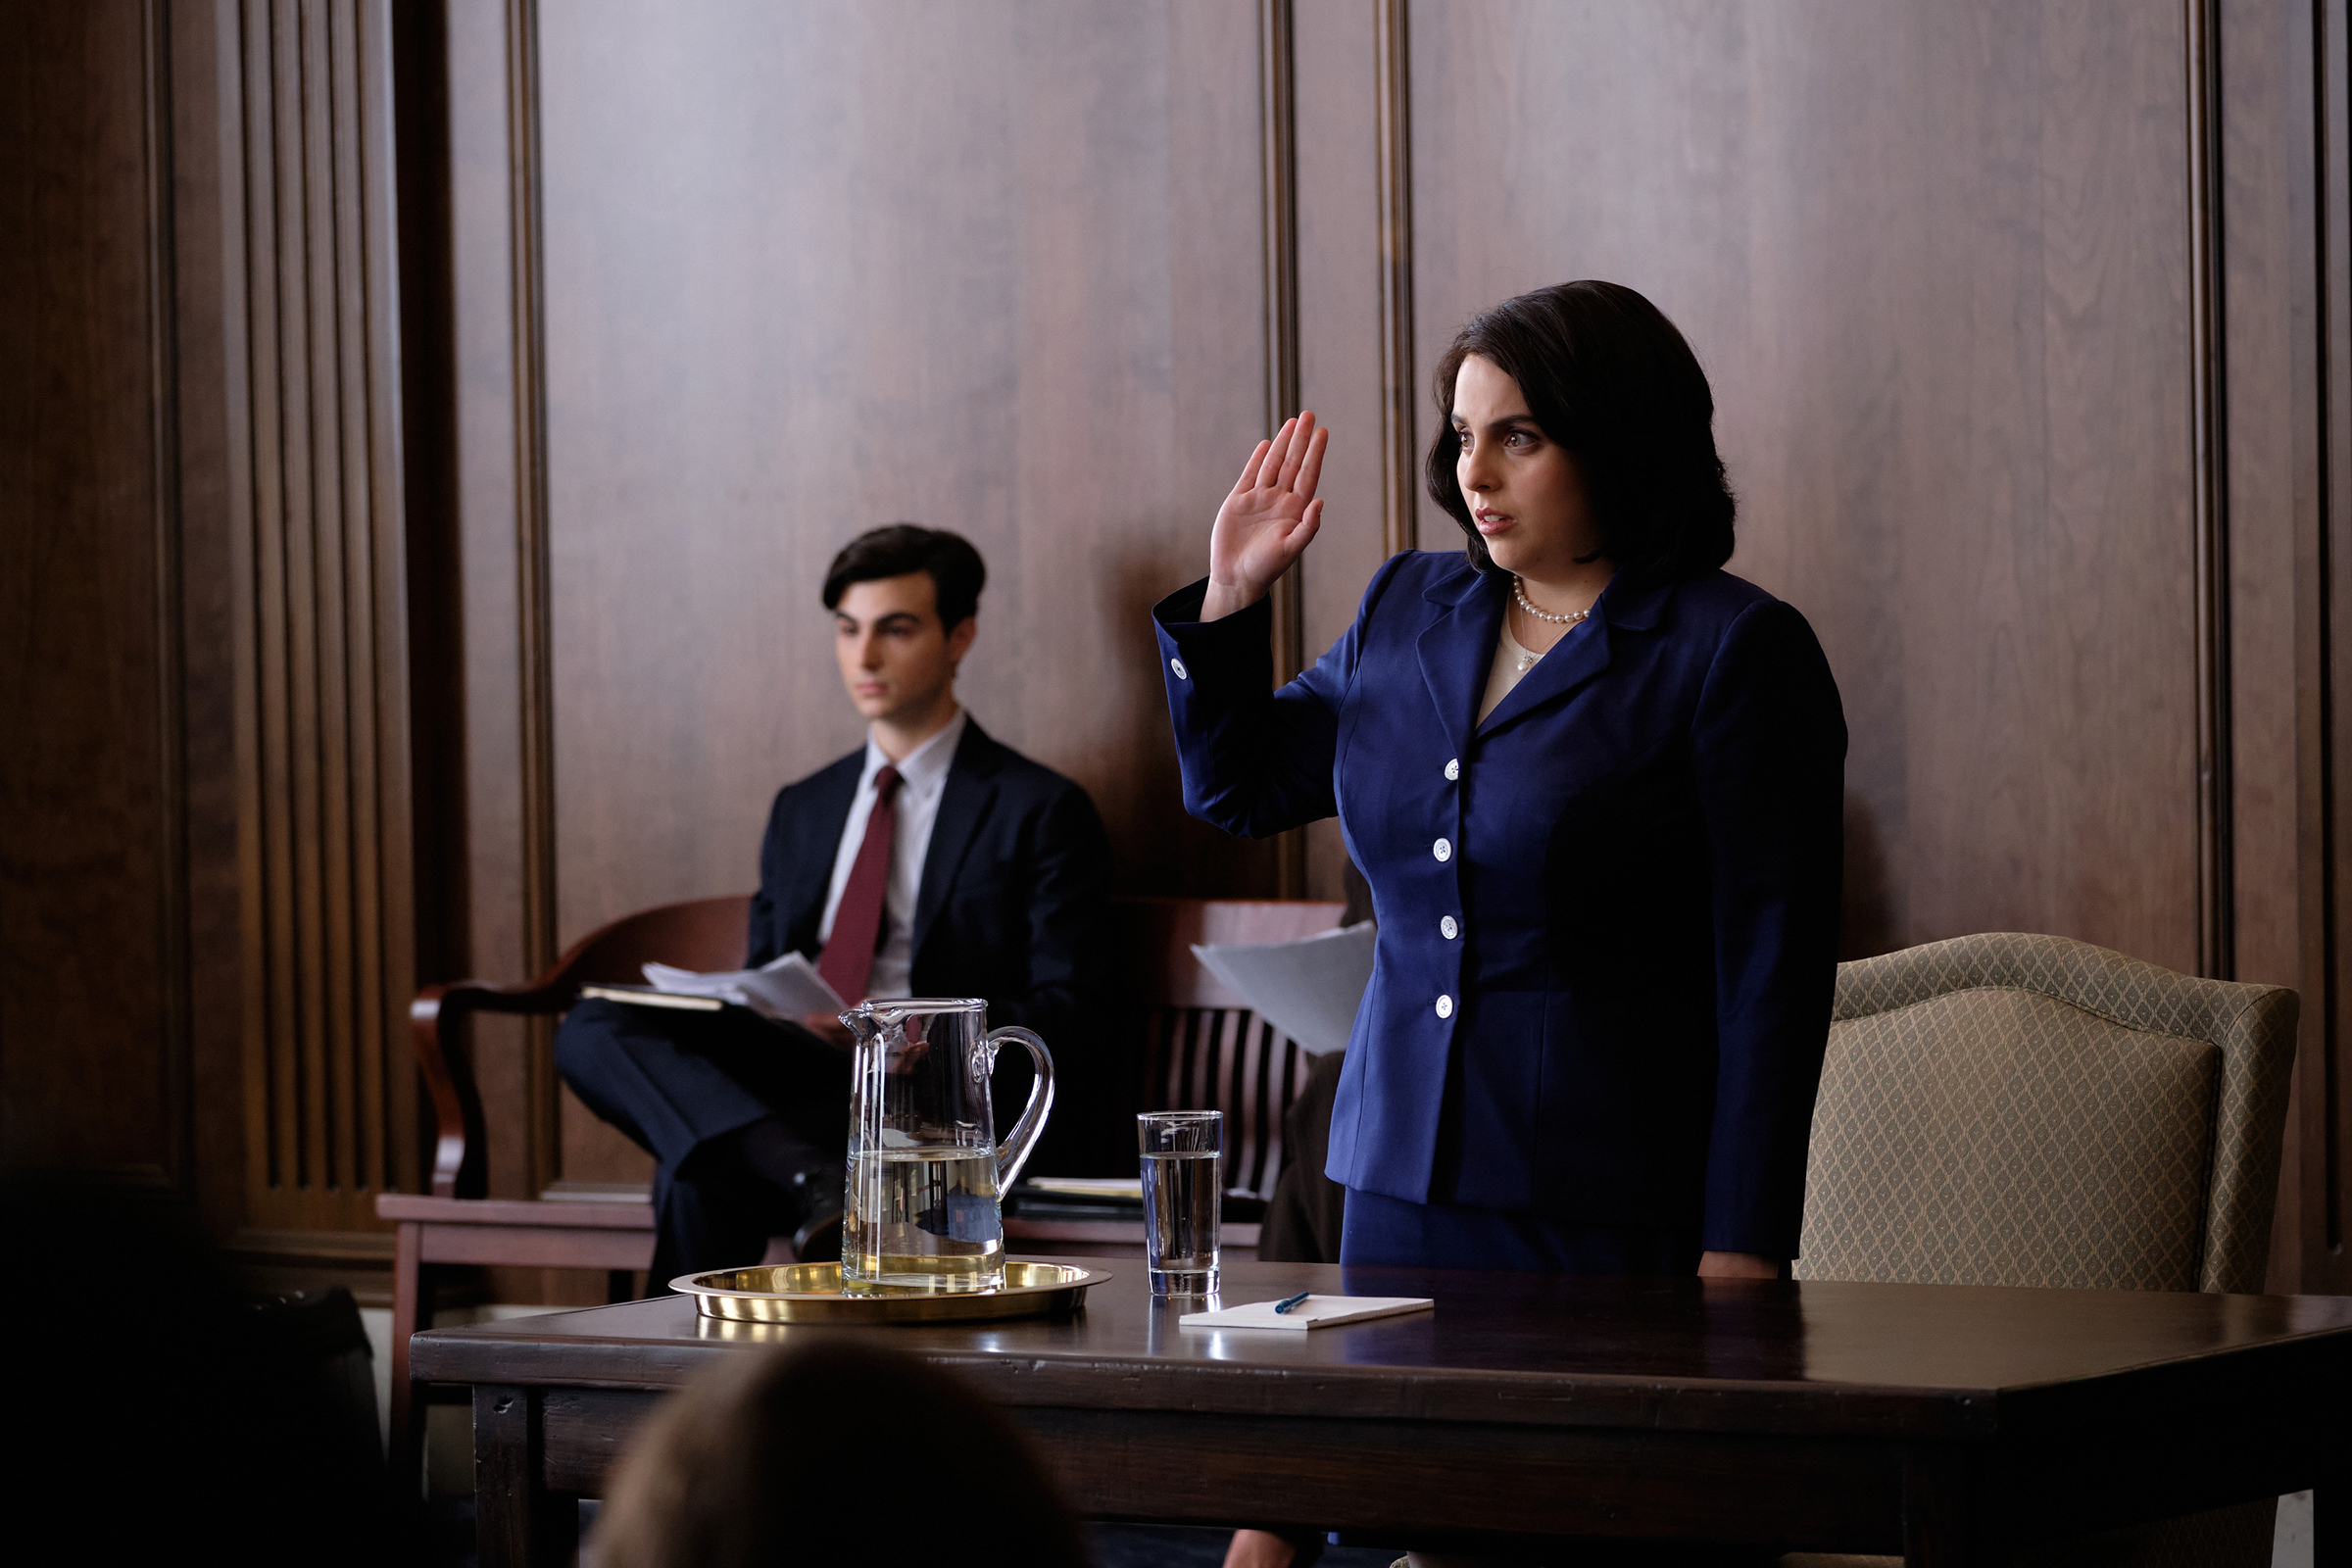 Impeachment: American Crime Story "The Grand Jury” Episode 9 (Airs Tuesday, November 2) -- Pictured: Beanie Feldstein as Monica Lewinsky. CR: Tina Thorpe/FX